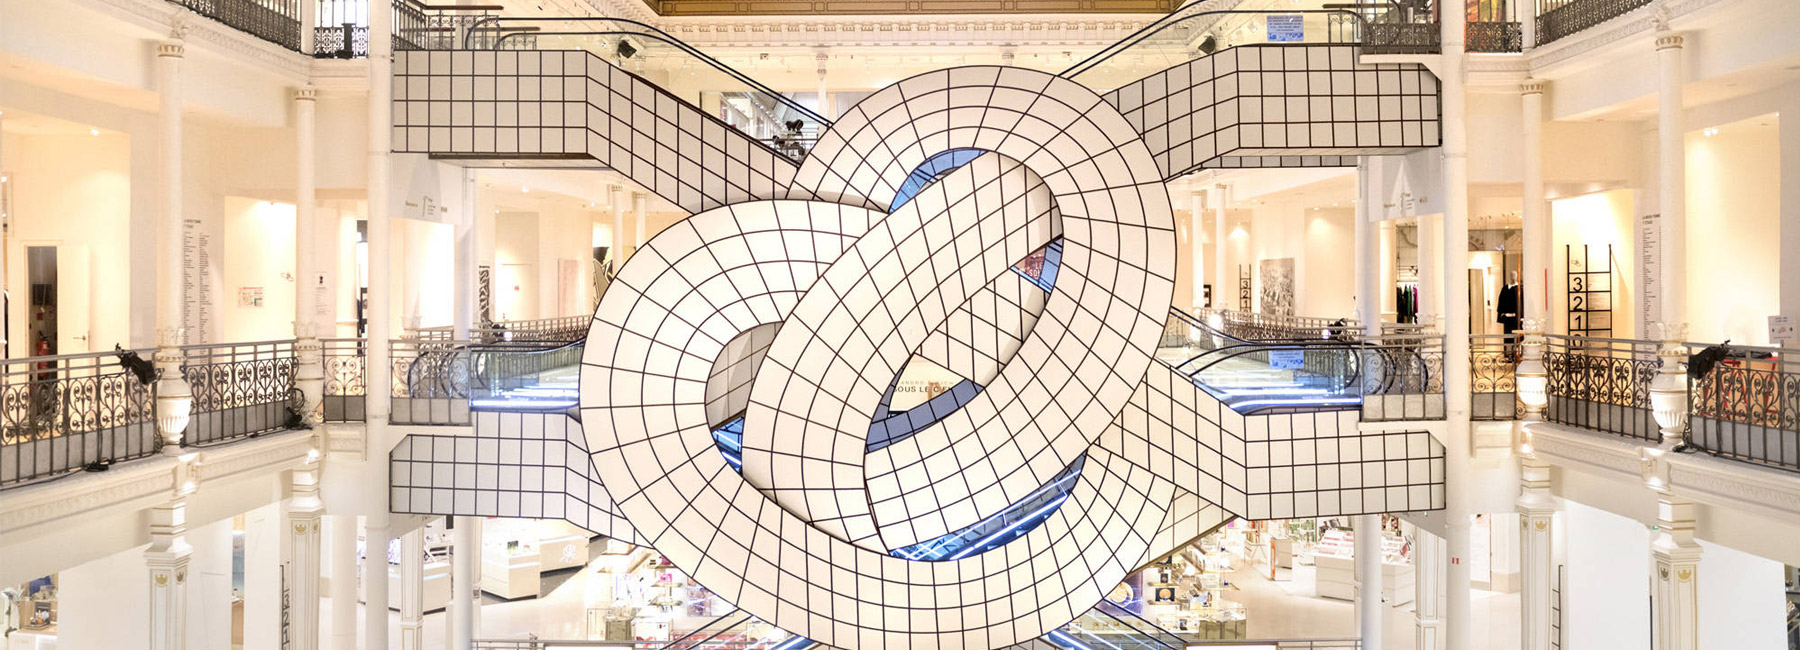 leandro erlich twists le bon marché's famed escalator into pretzel-like form